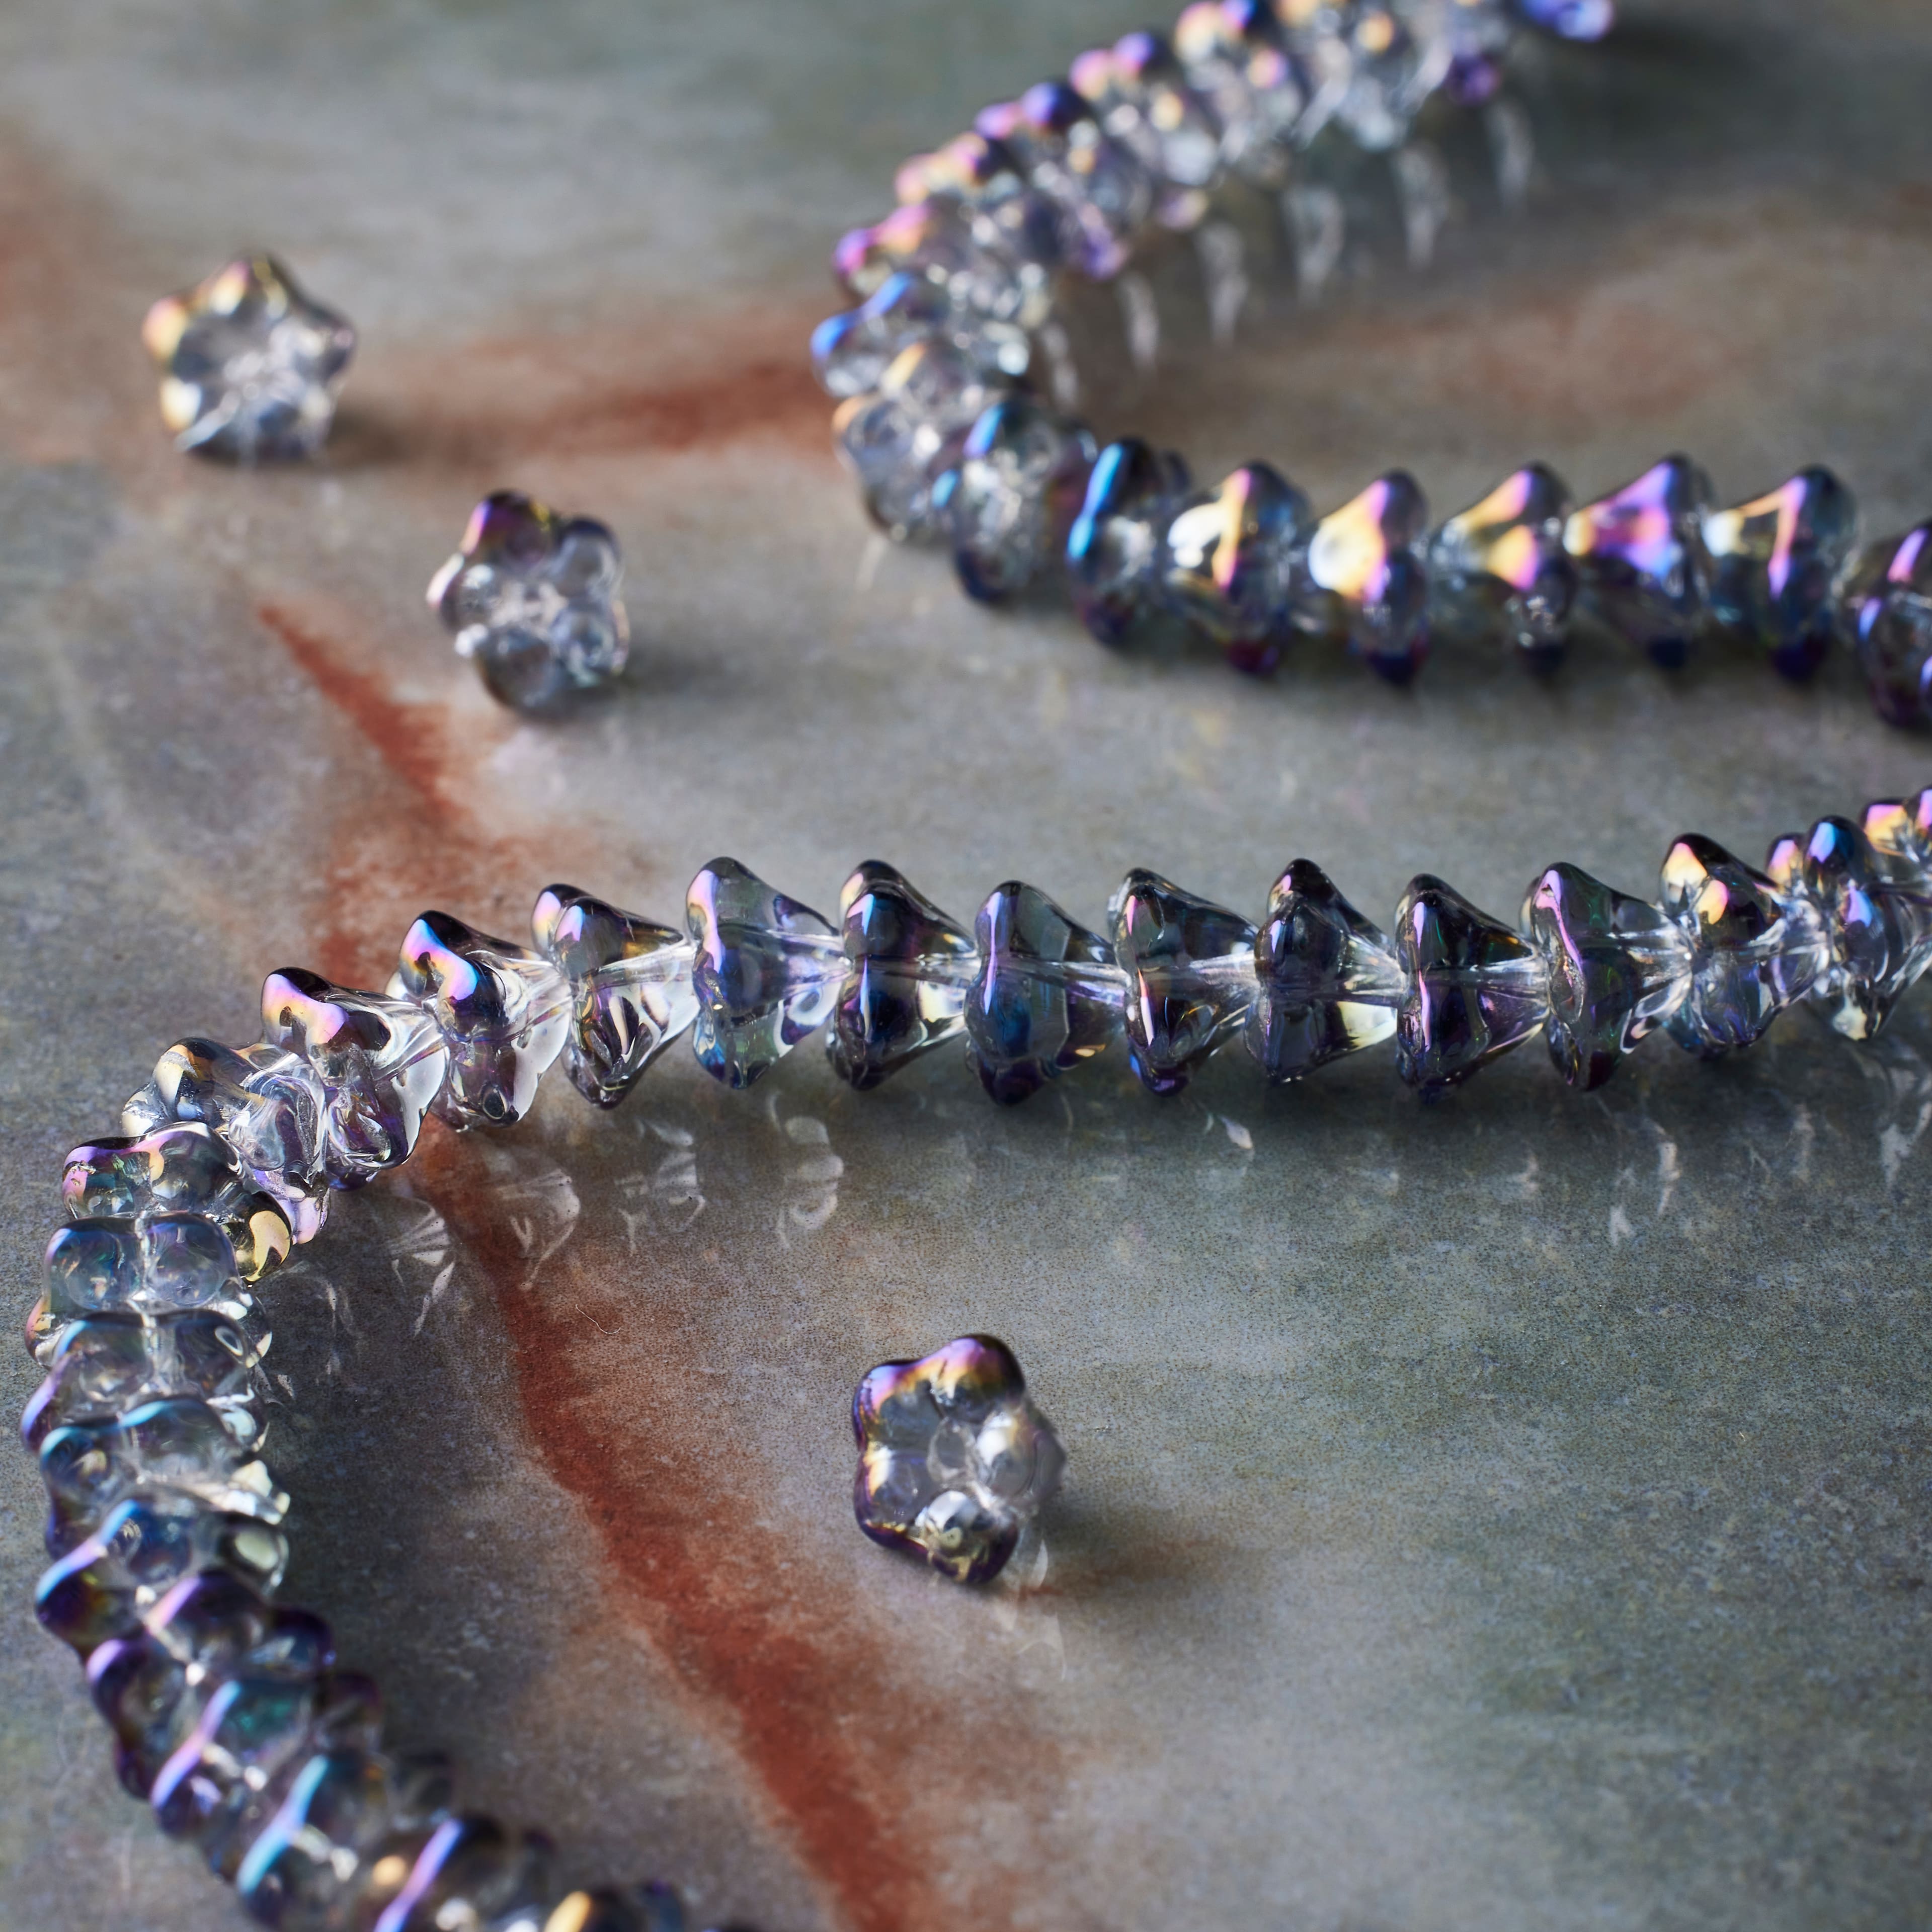 Purple AB Glass Flower Beads, 7.5mm by Bead Landing&#x2122;